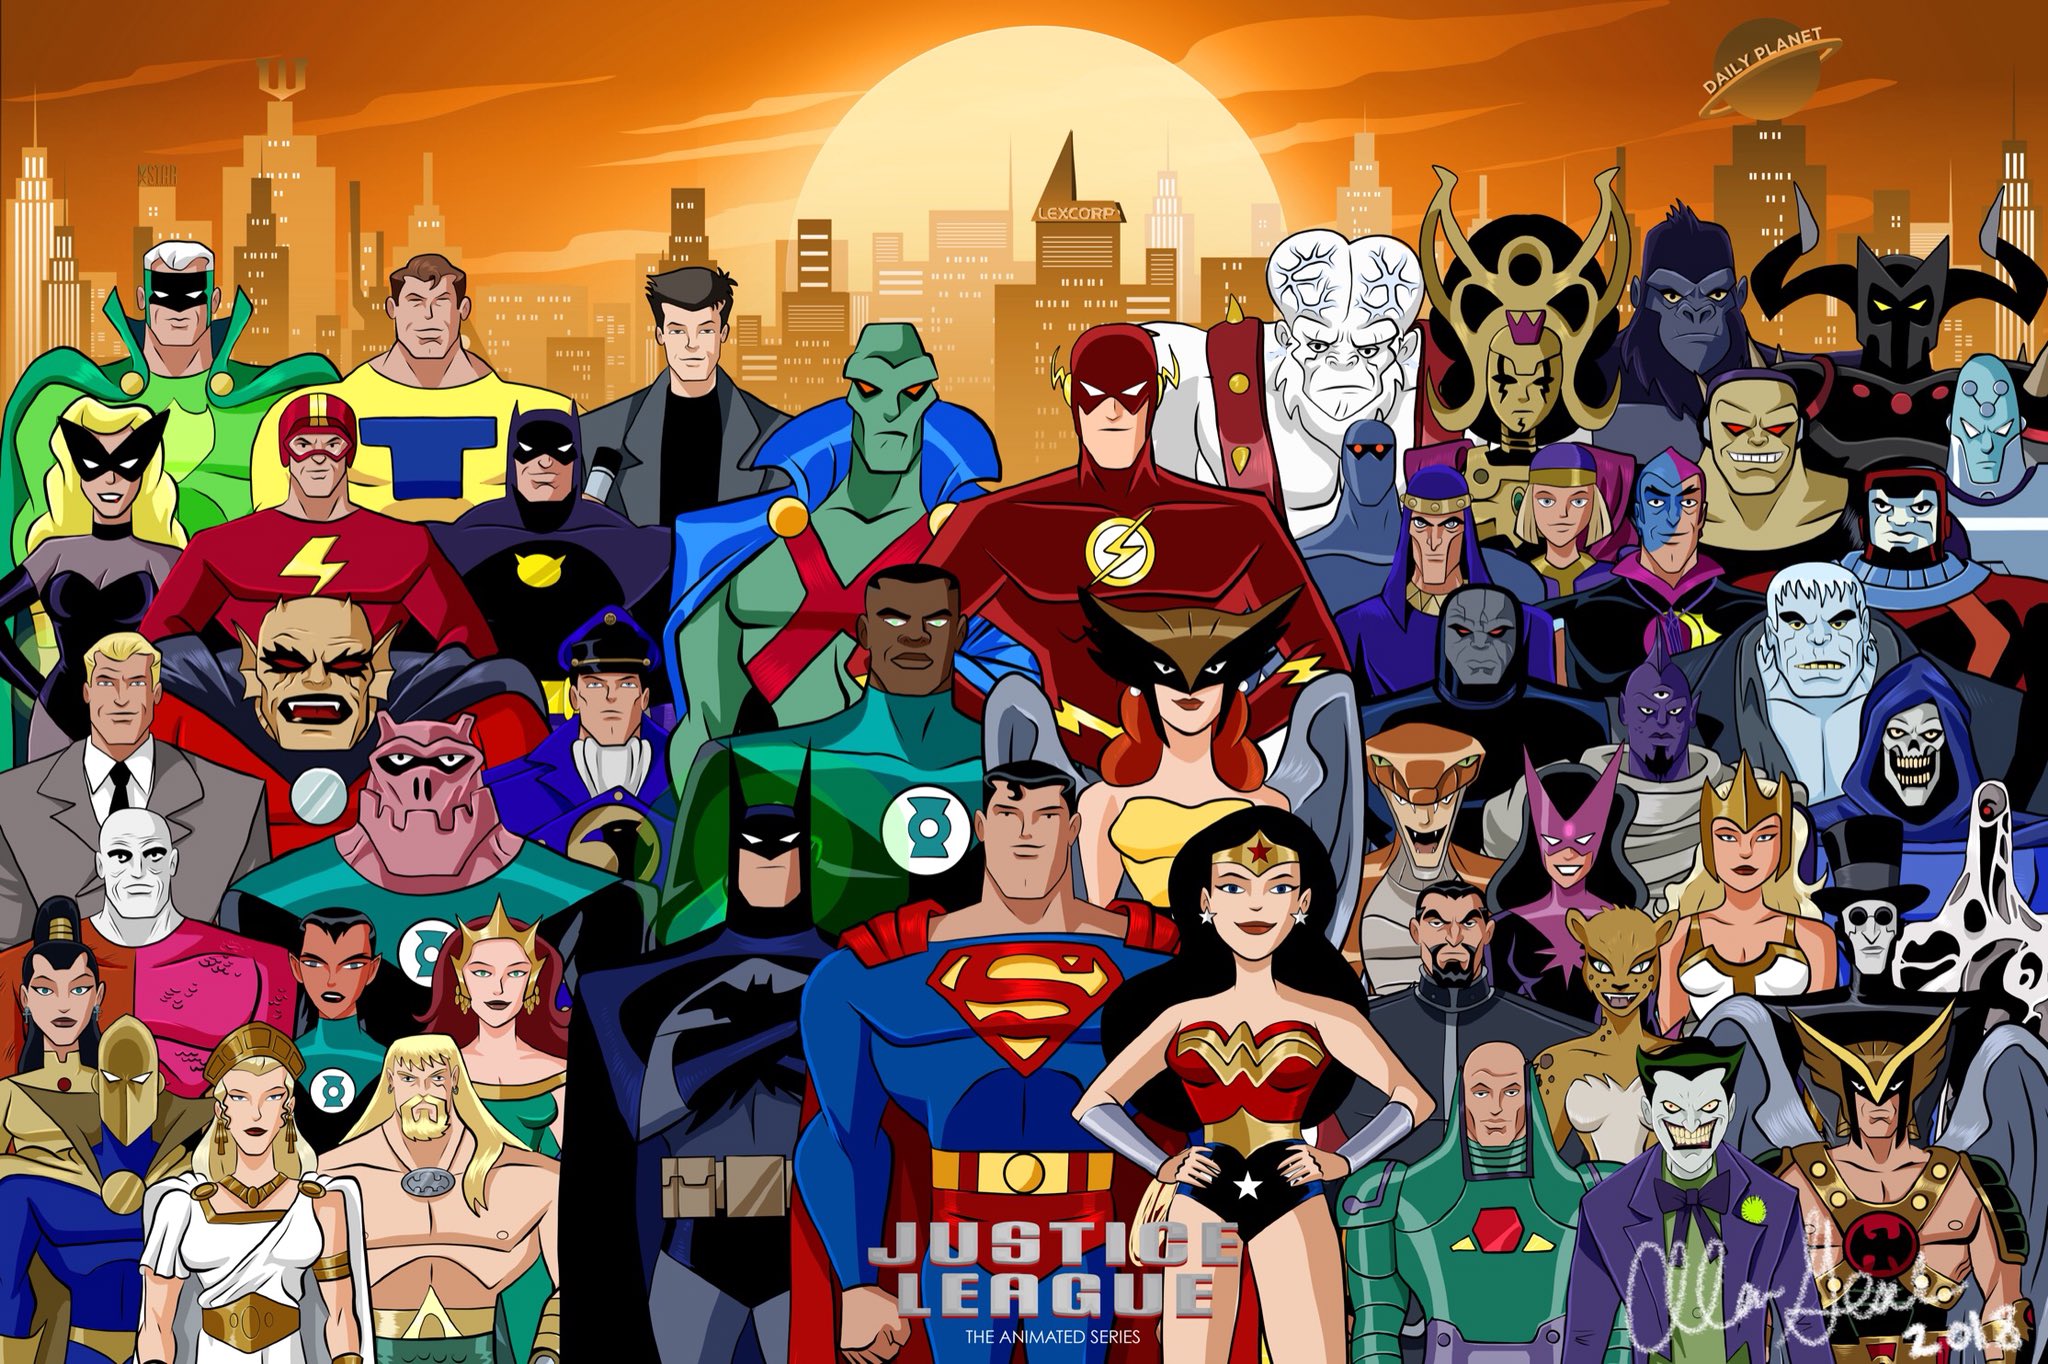 tv show, justice league, aquaman, batman, brainiac (dc comics), cheetah (dc comics), daily planet, darkseid (dc comics), doctor fate (dc comics), flash, gorilla grodd, green lantern, hawkgirl (dc comics), hro talak, j'onn j'onzz, john stewart (green lantern), joker, kilowog (dc comics), lex luthor, martian manhunter, mera (dc comics), mongul, queen hippolyta, shayera hol, snapper carr, solomon grundy, star sapphire (dc comics), steve trevor, superman, ultra humanite, vandal savage, wally west, wonder woman